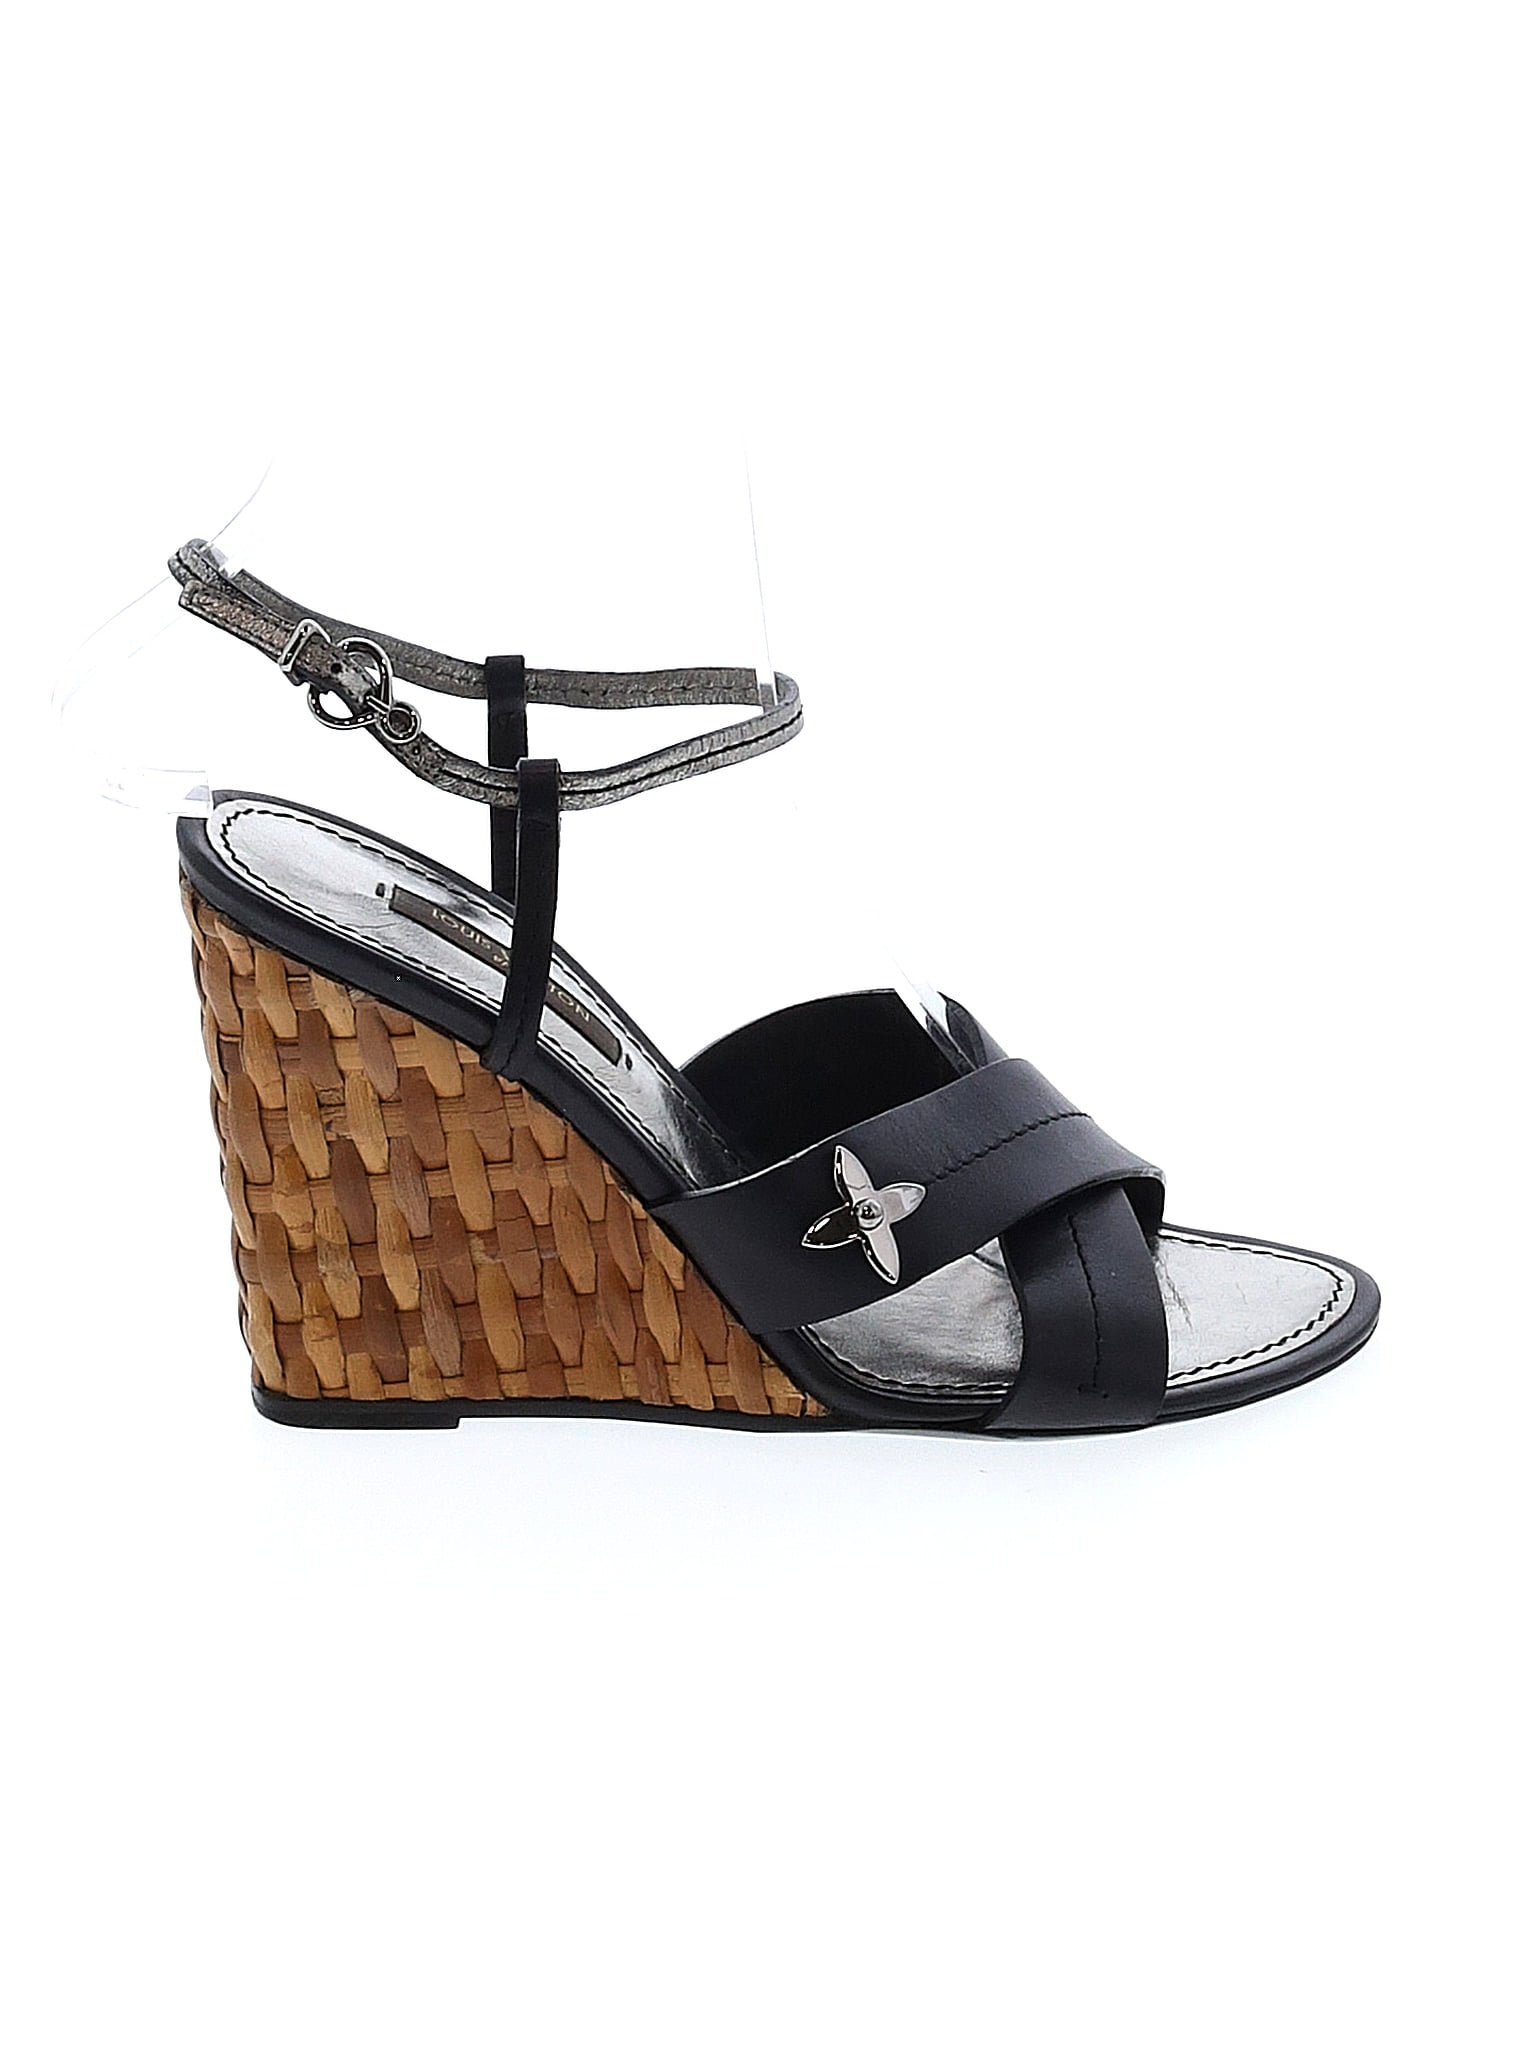 Louis Vuitton Paseo Flat Comfort Sandal BLACK. Size 36.5